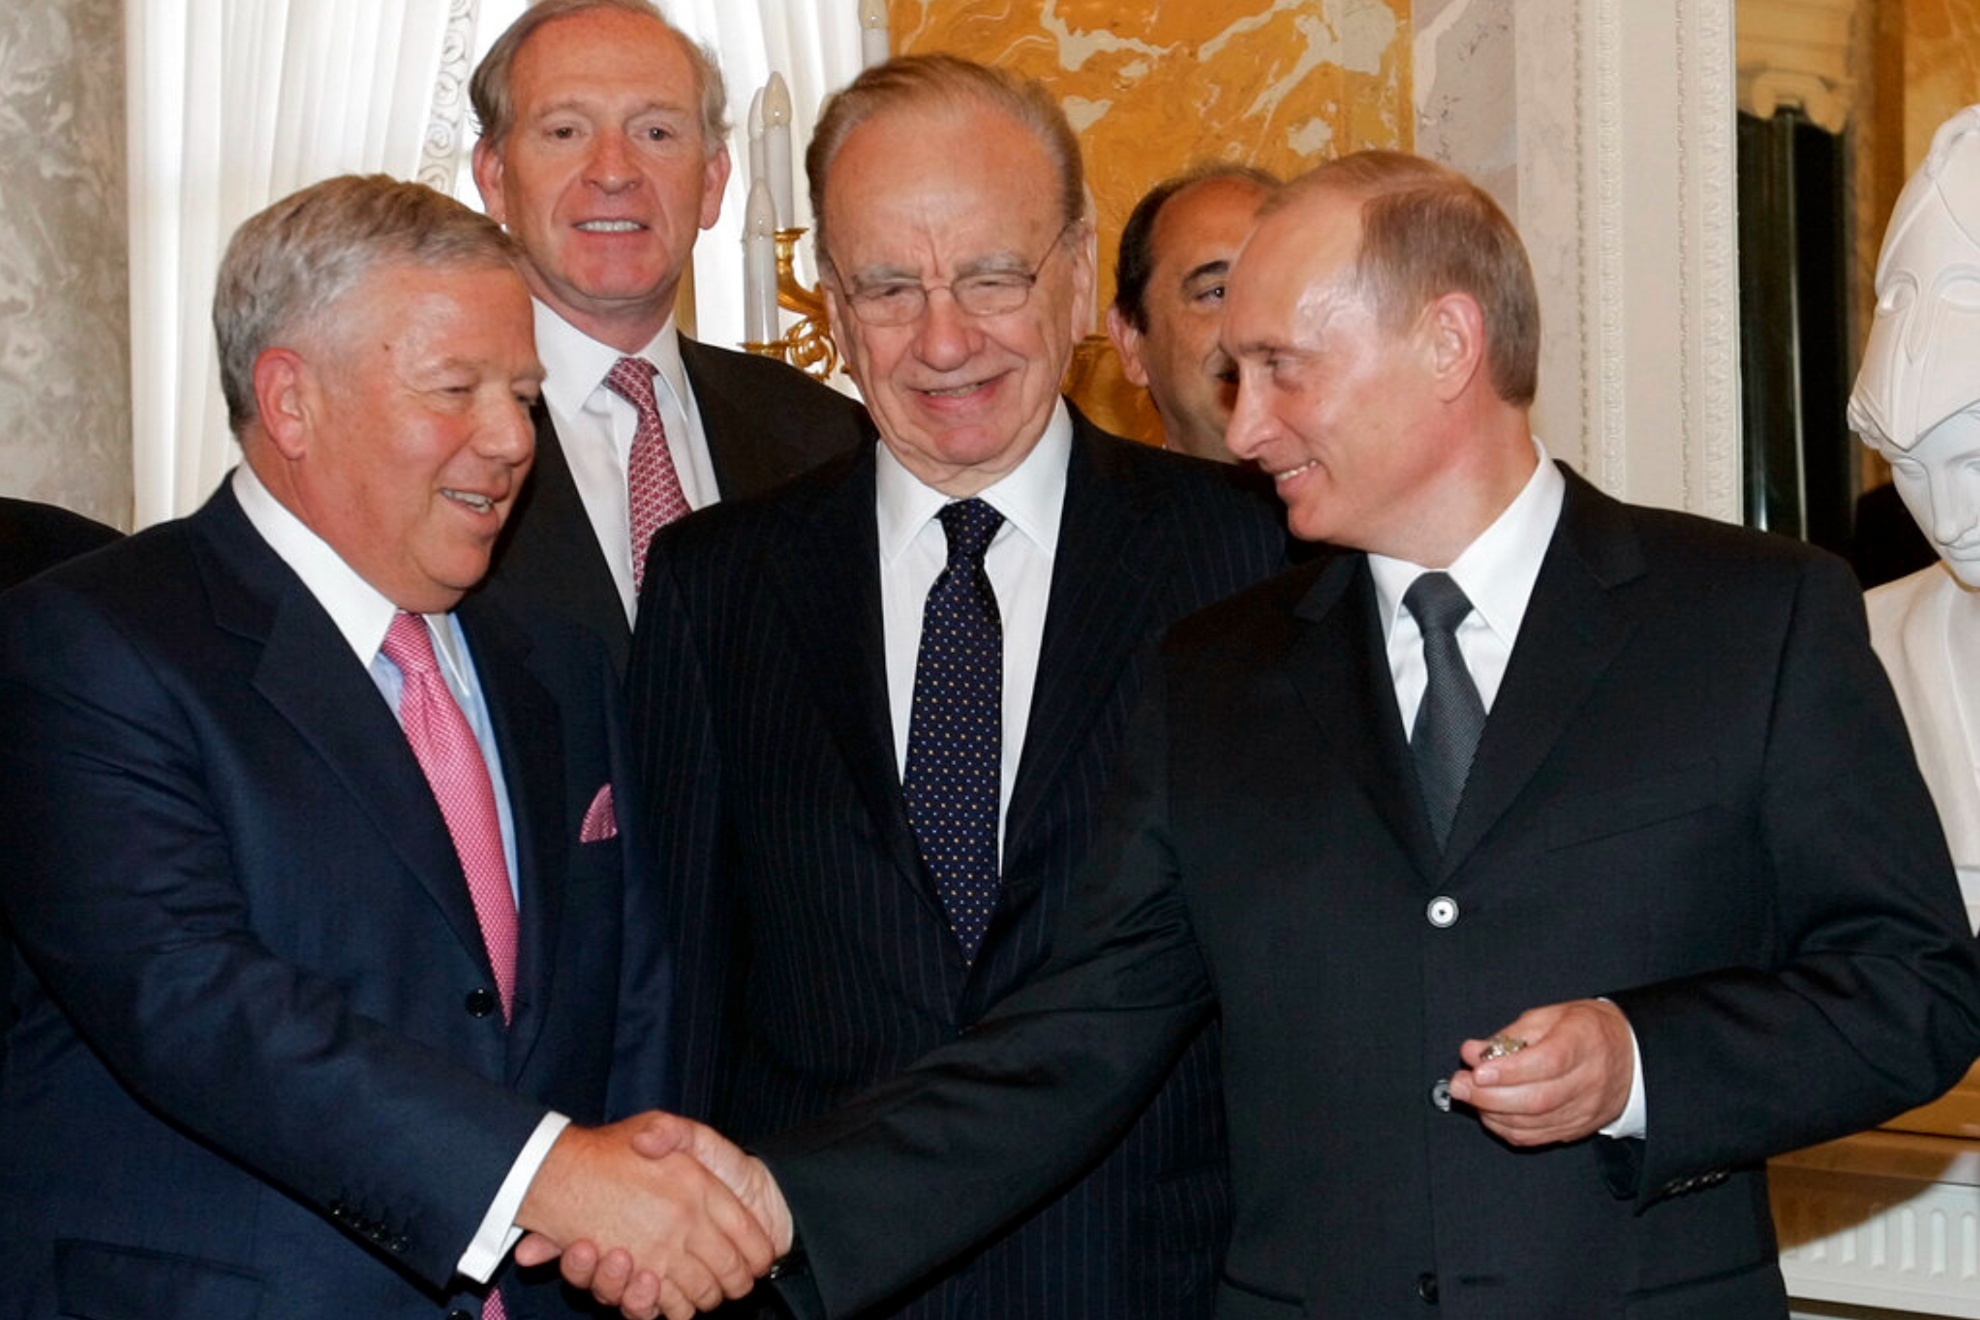 The fateful meeting between Kraft and Putin in June 2005.